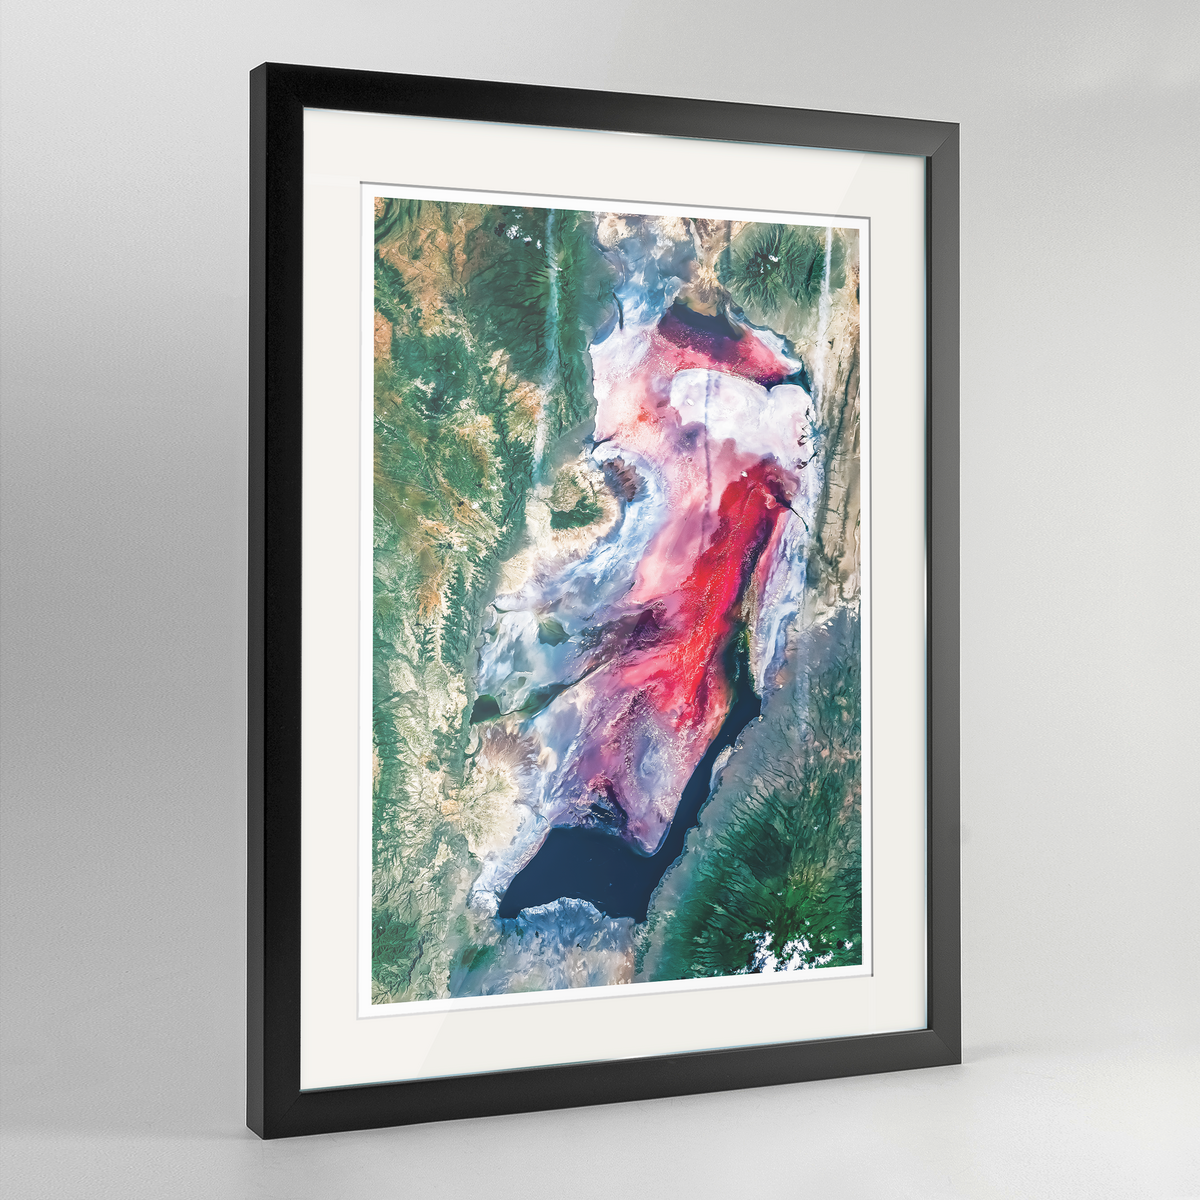 Lake Natron Earth Photography Art Print - Framed